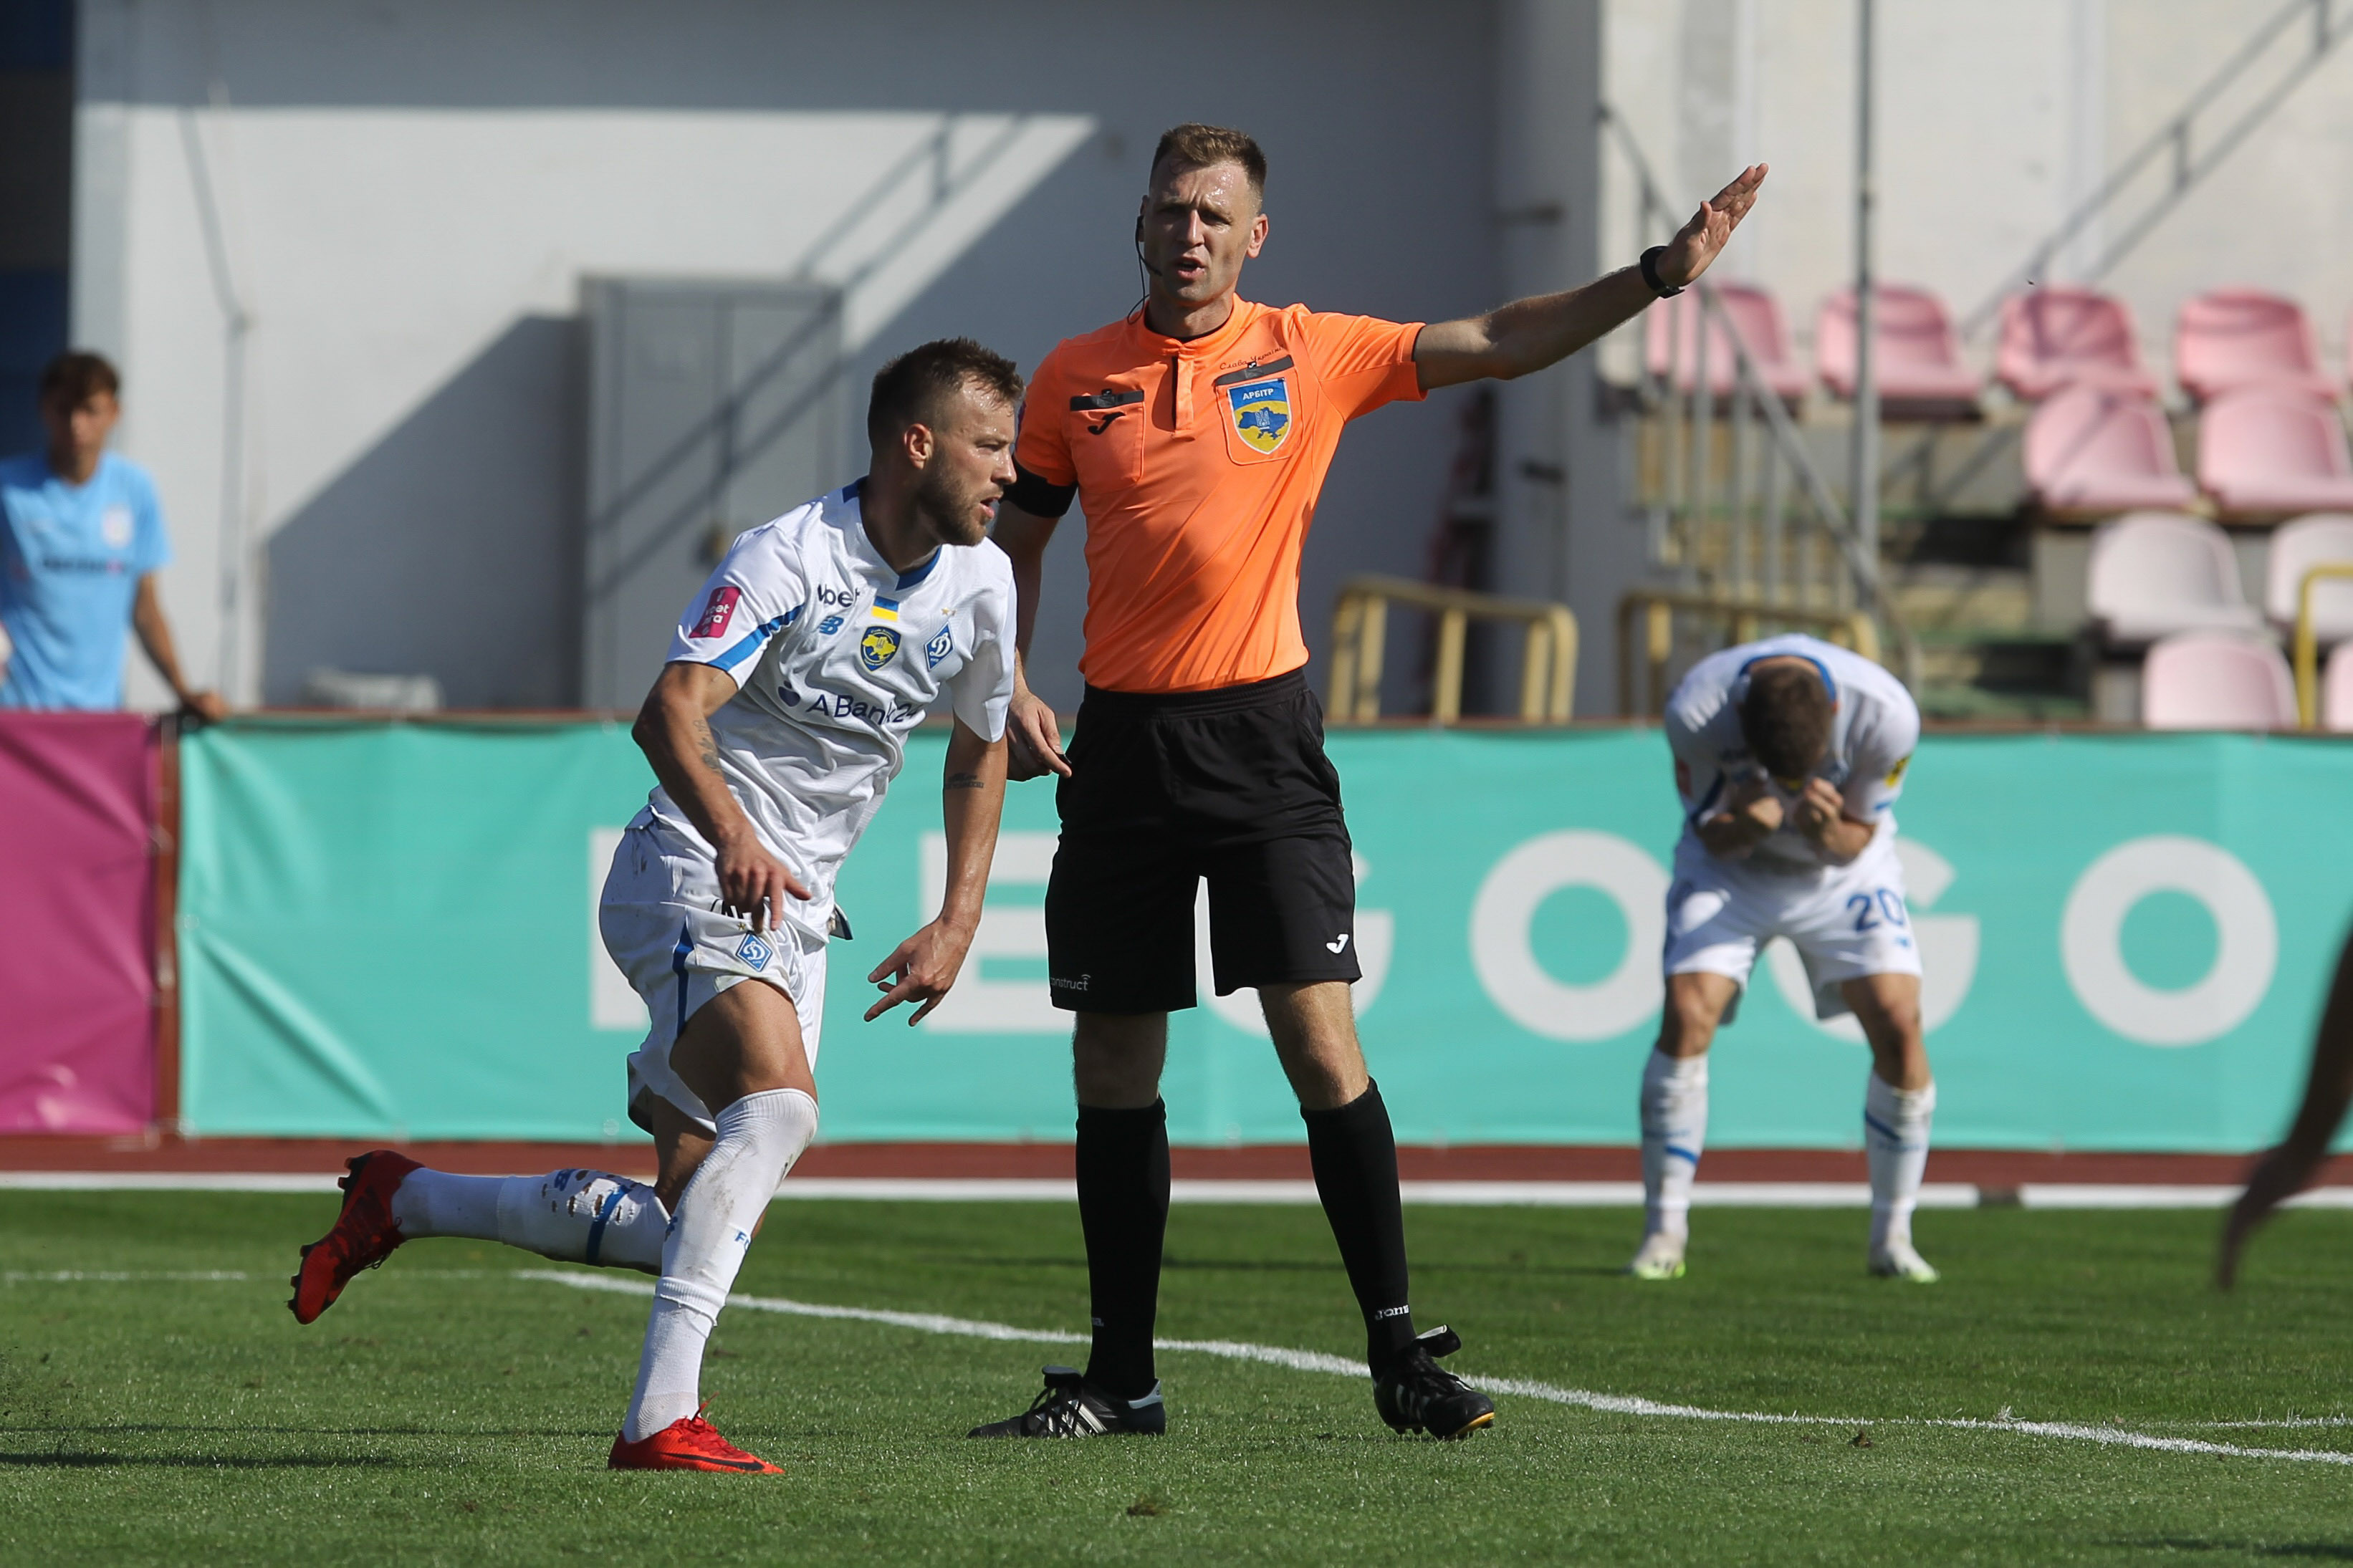 Dmytro Panchyshyn – Veres vs Dynamo referee